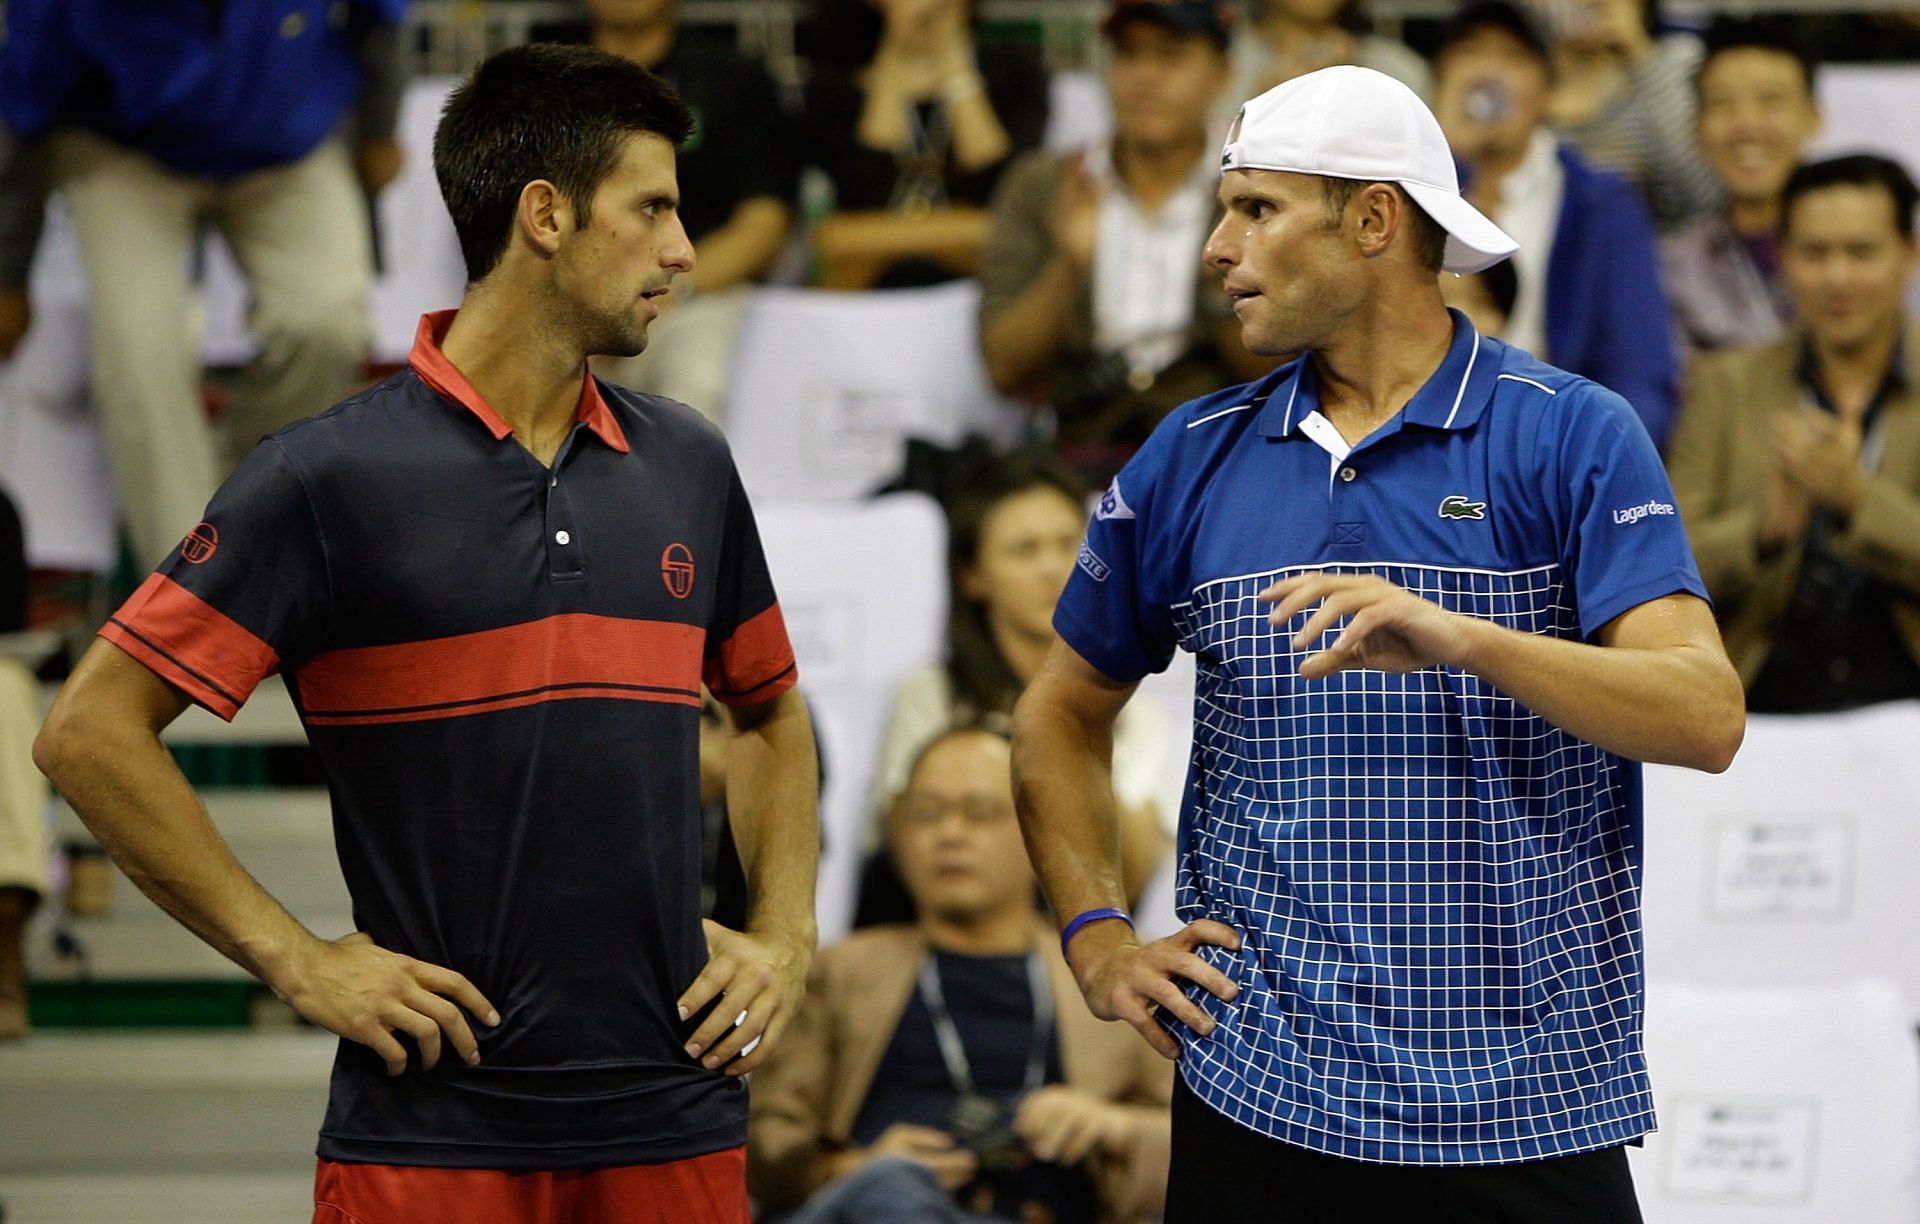 Novak Djokovic and Andy Roddick interact after a match.